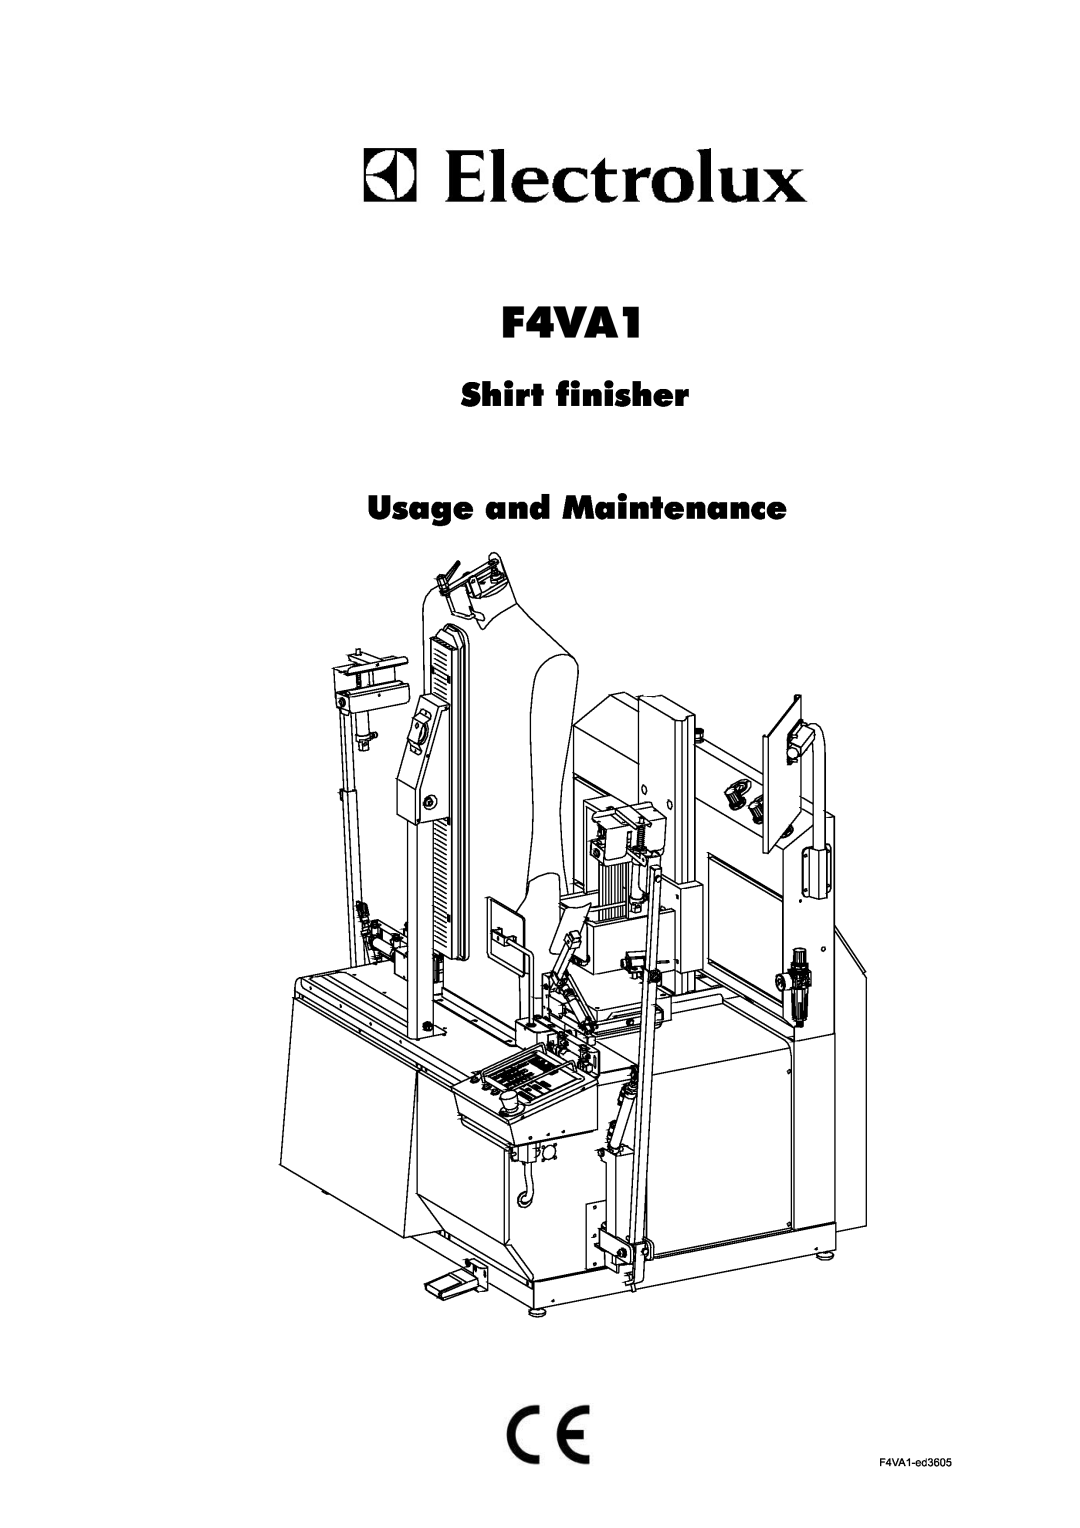 Electrolux F4VA1 manual Shirt finisher Usage and Maintenance 